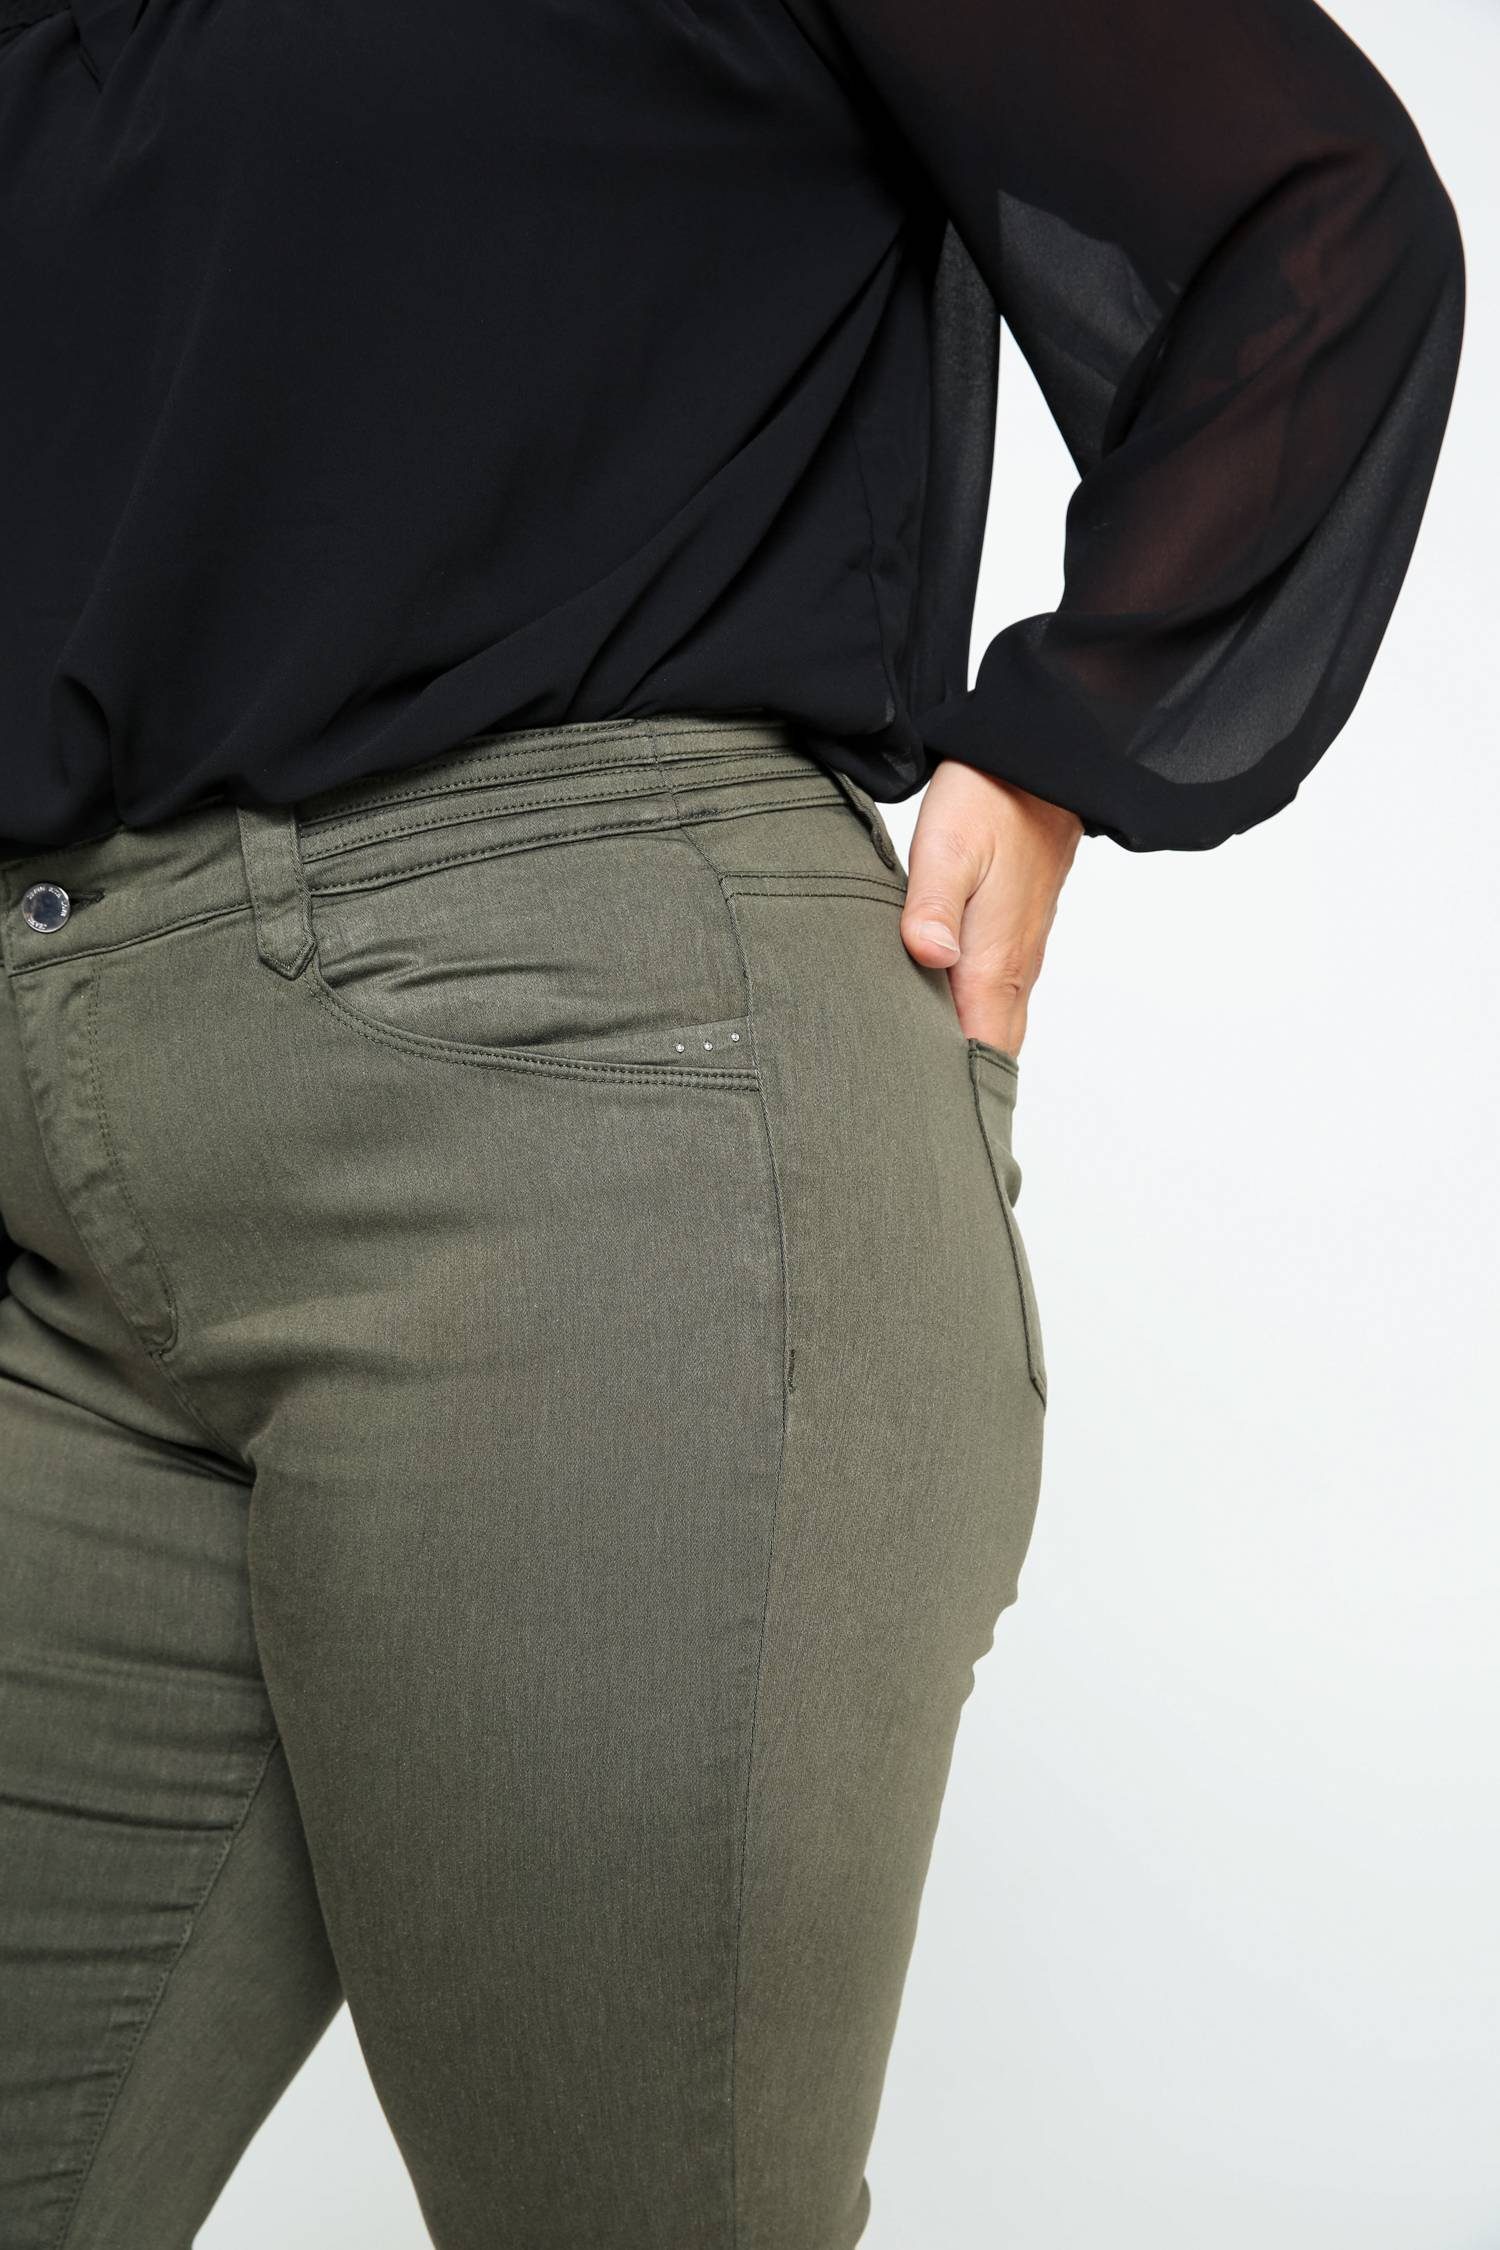 Stickerei L 34 Slim-Fit-Jeans 5-Pocket-Jeans Mit Paprika Khaki Louise